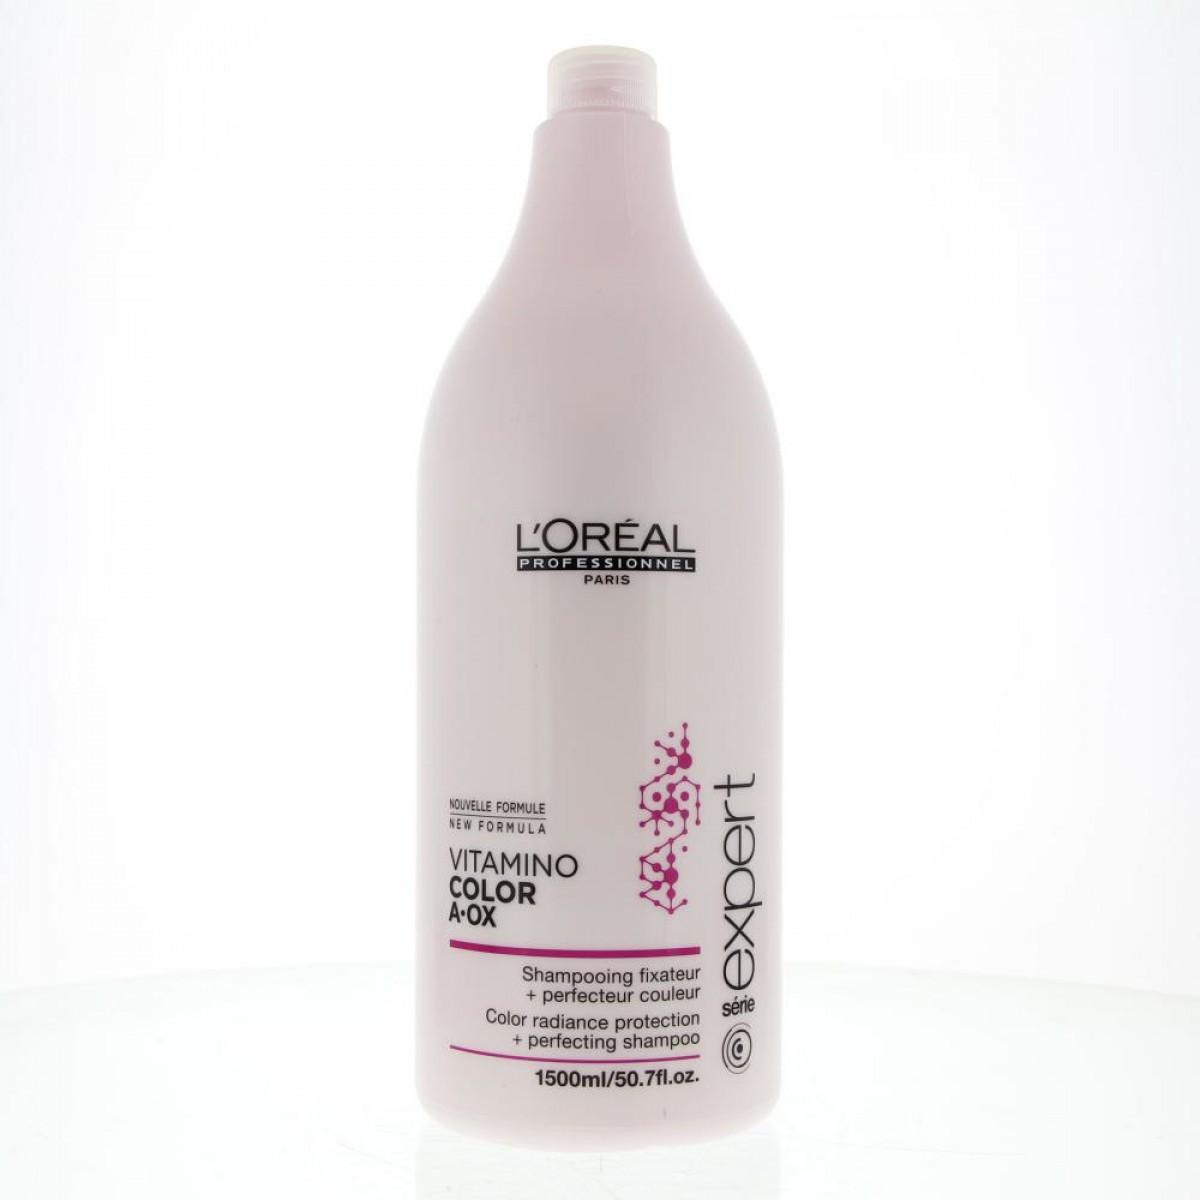 loreal-l-oreal-expert-vitamino-color-aox-shampooing-fixateur-perfecteur-couleur-1500ml